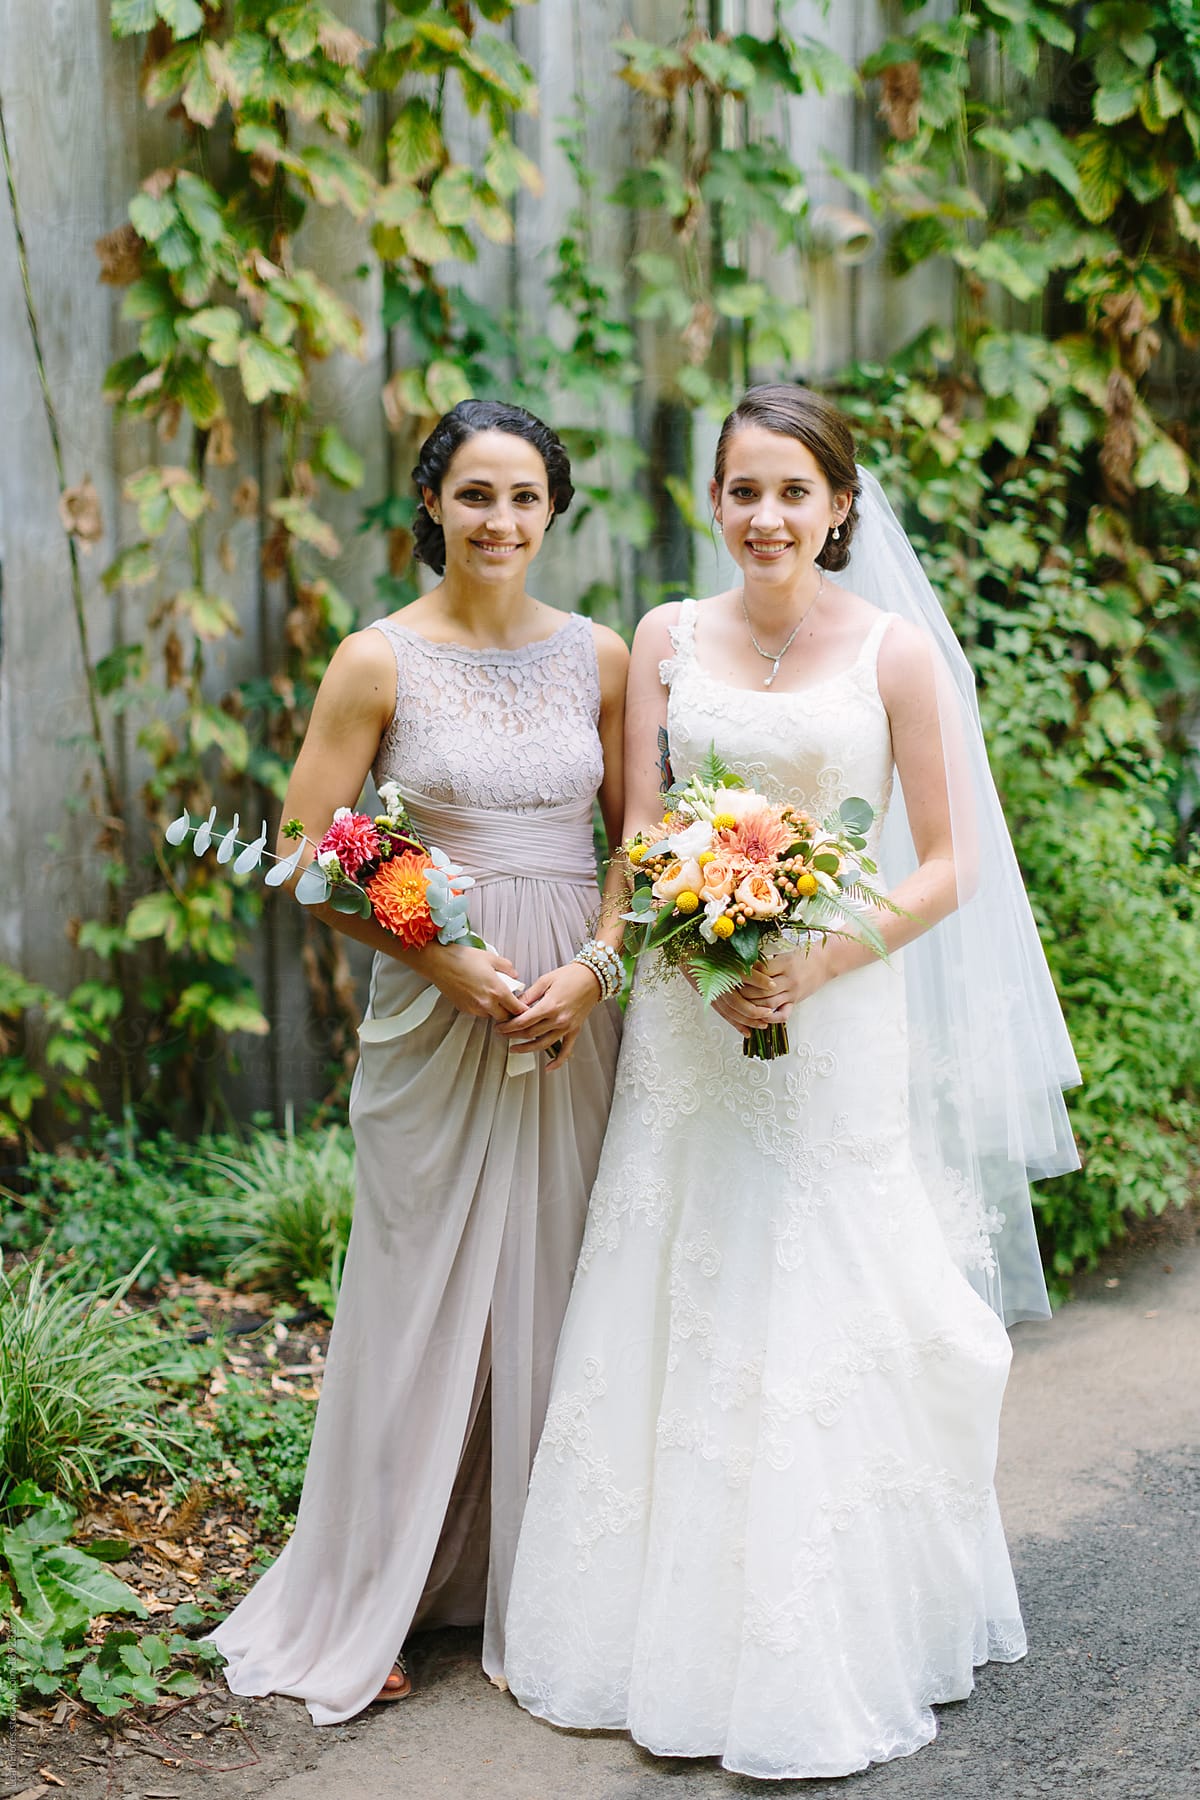 Bridesmaids Holding Bouquet Outdoors